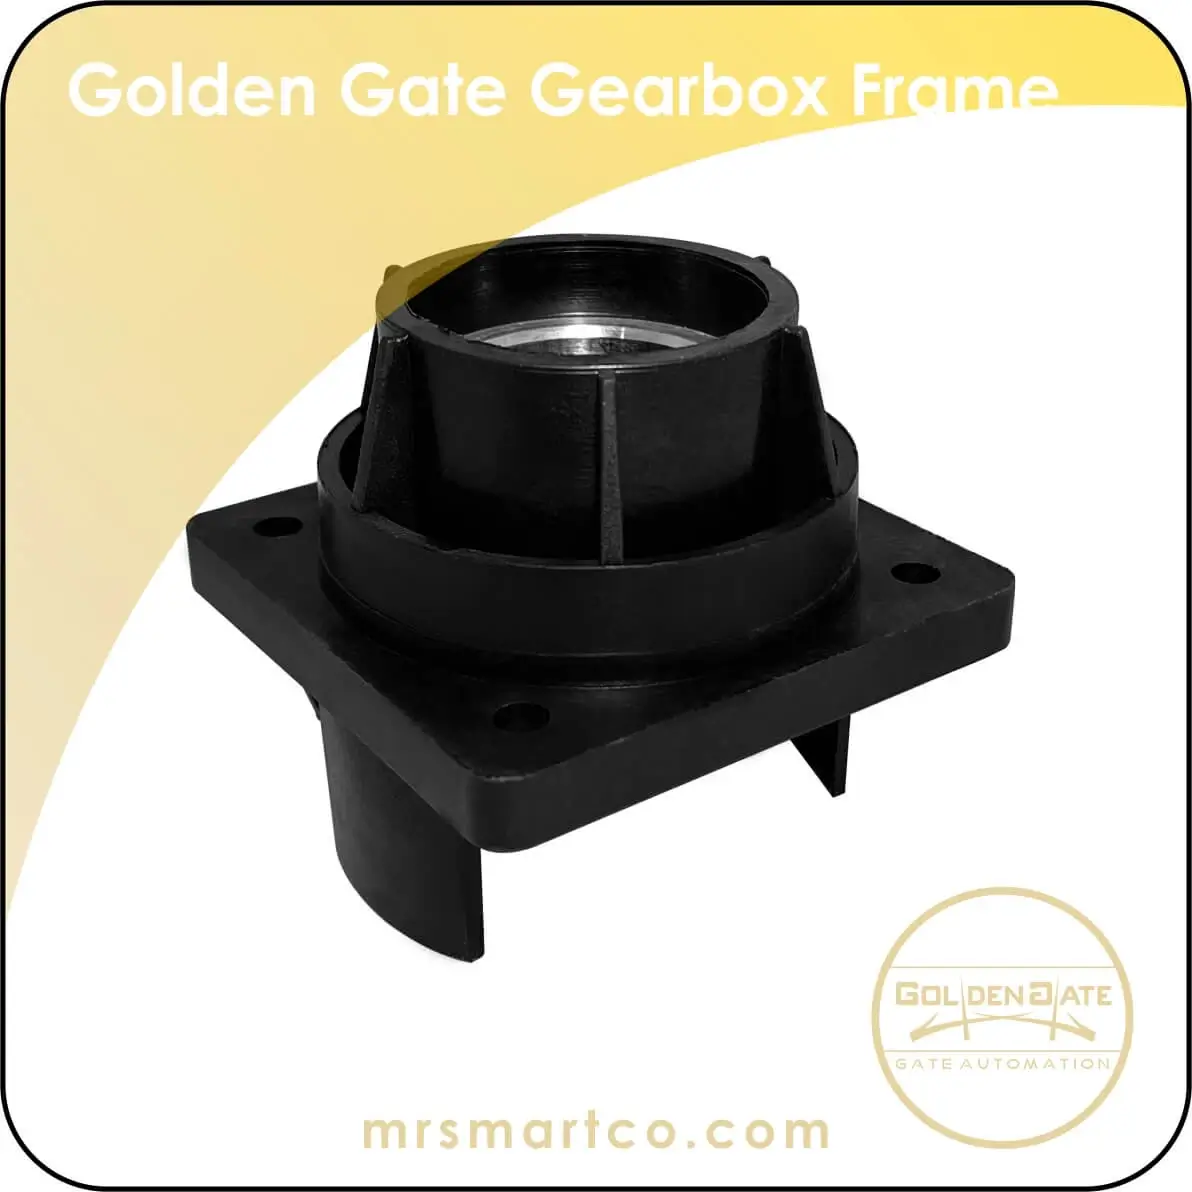 Golden Gate Gearbox Frame